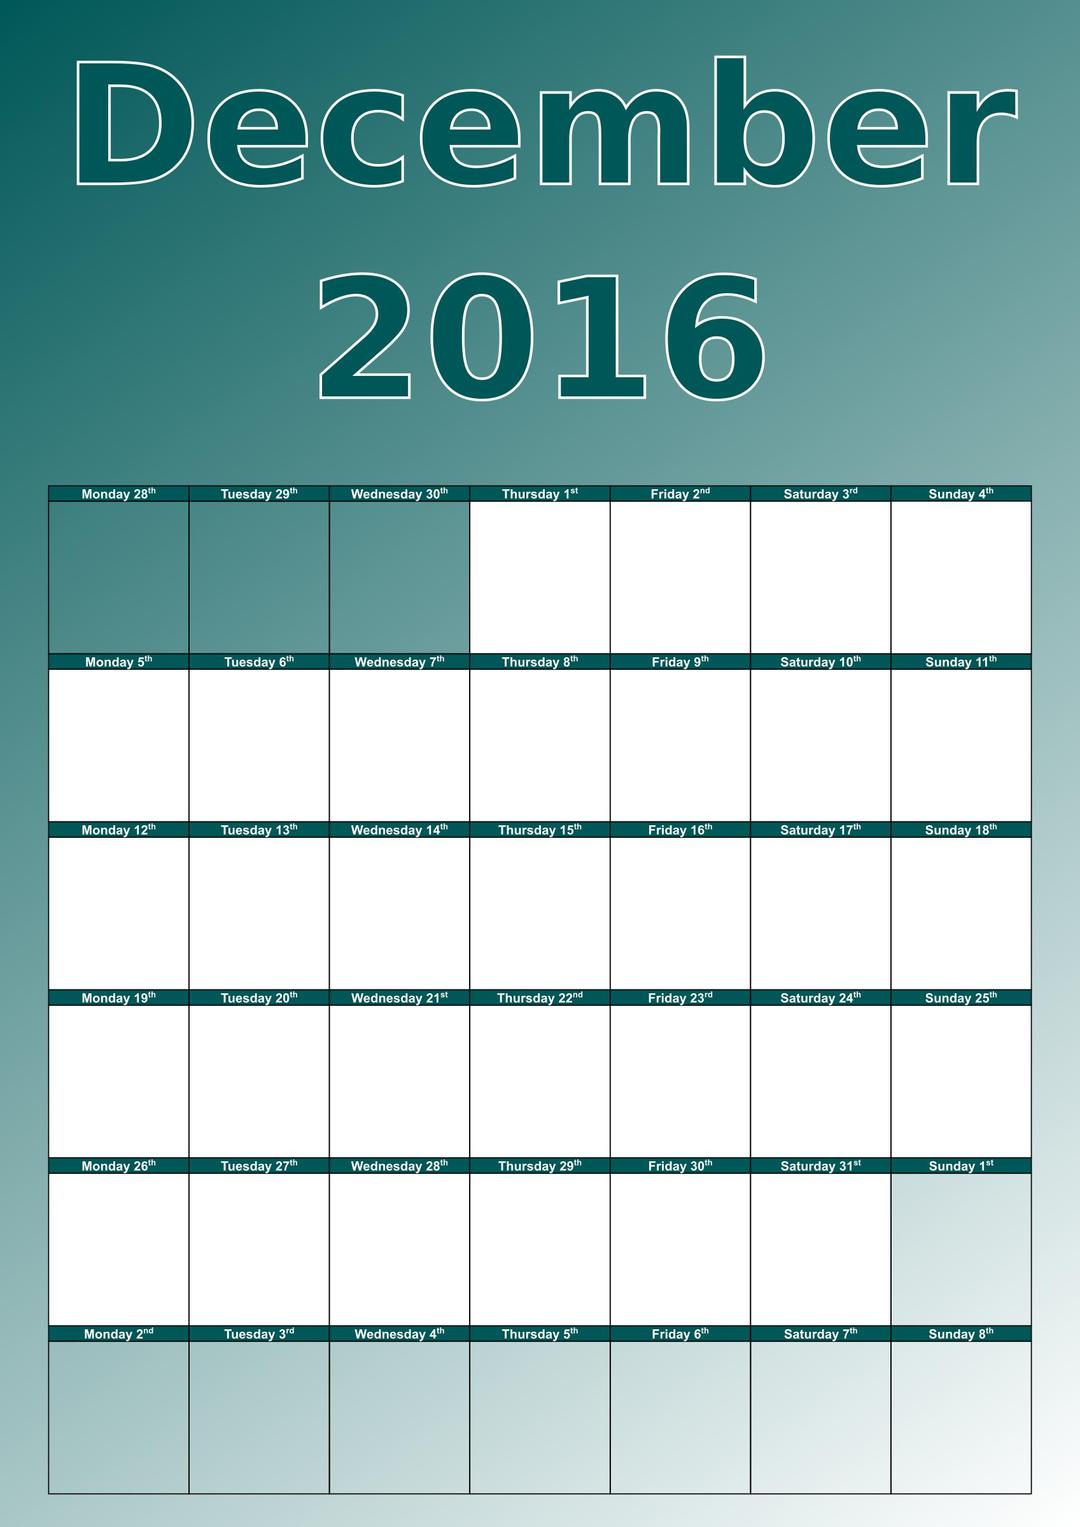 December calendar png transparent